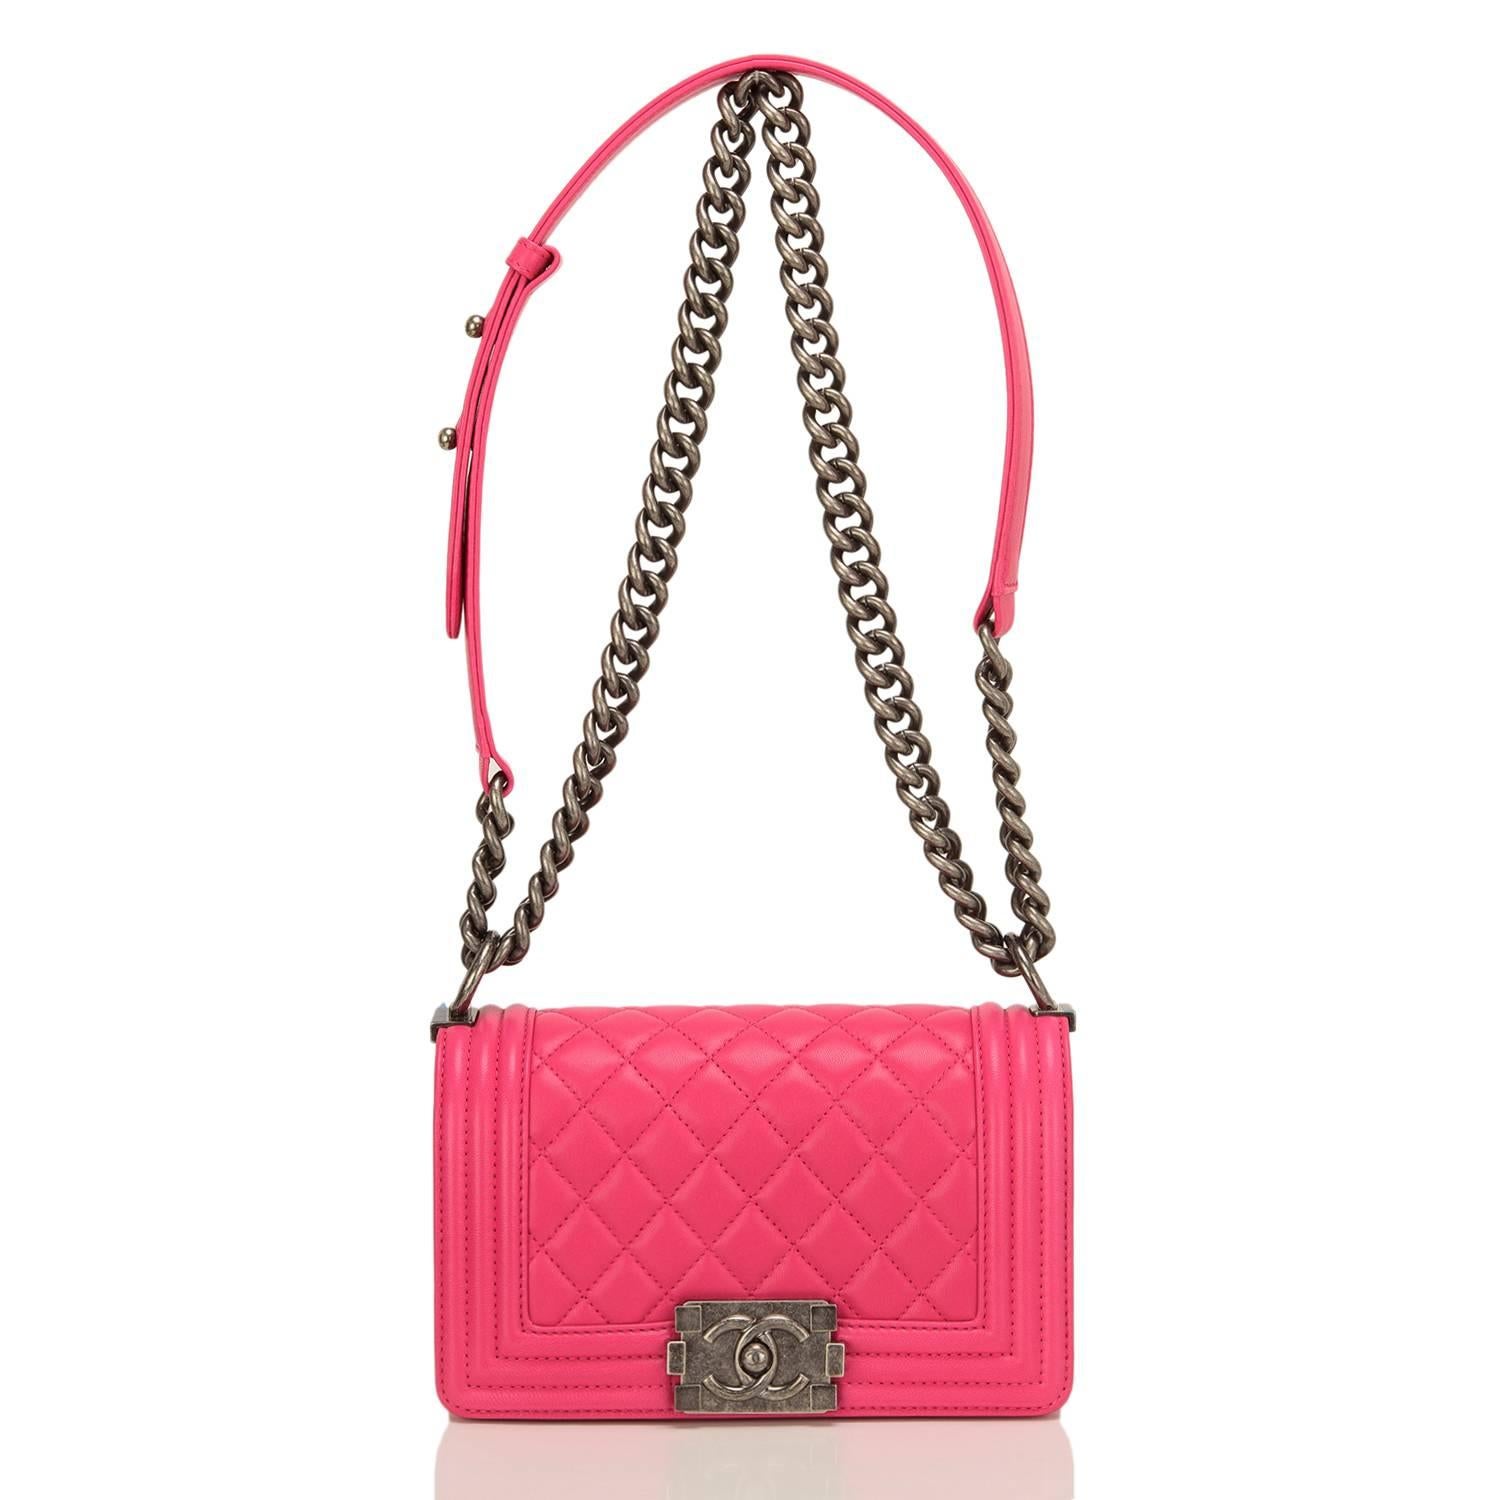 Chanel Fuchsia Pink Lambskin Small Boy Bag 2